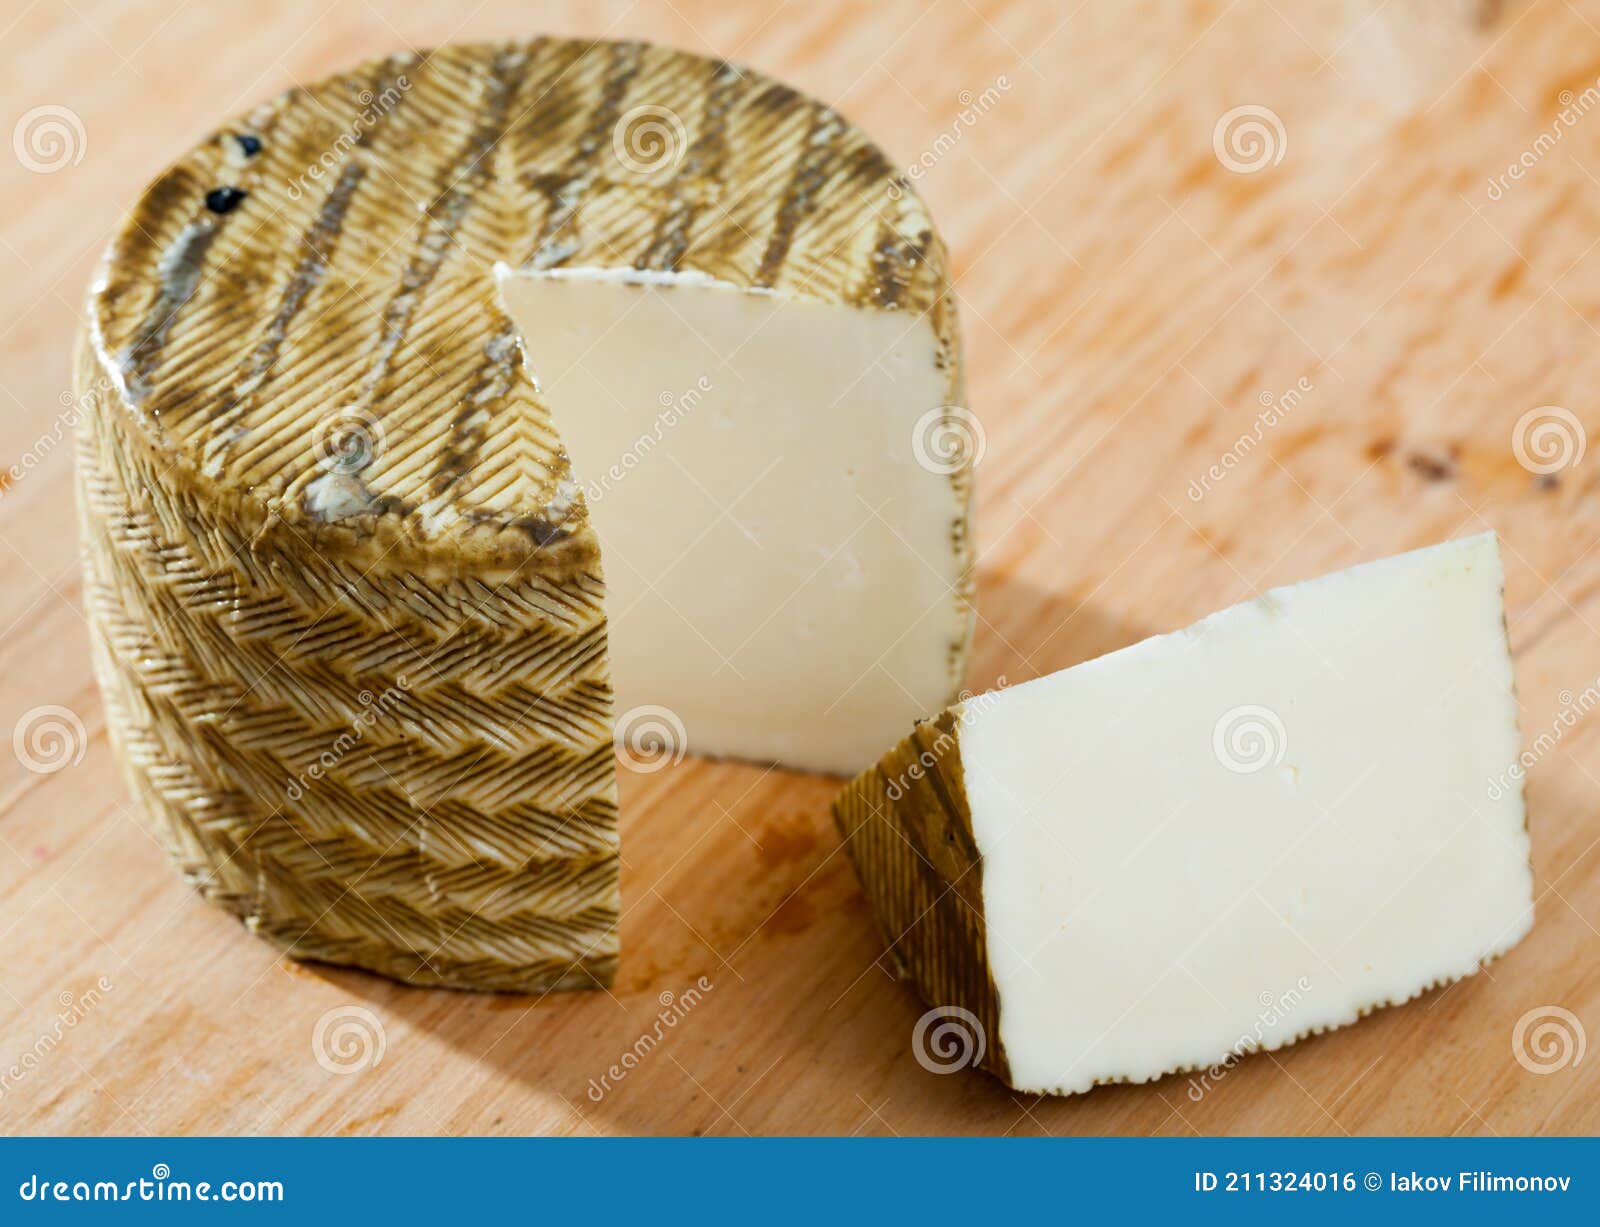 traditional spanish cheese mezclado